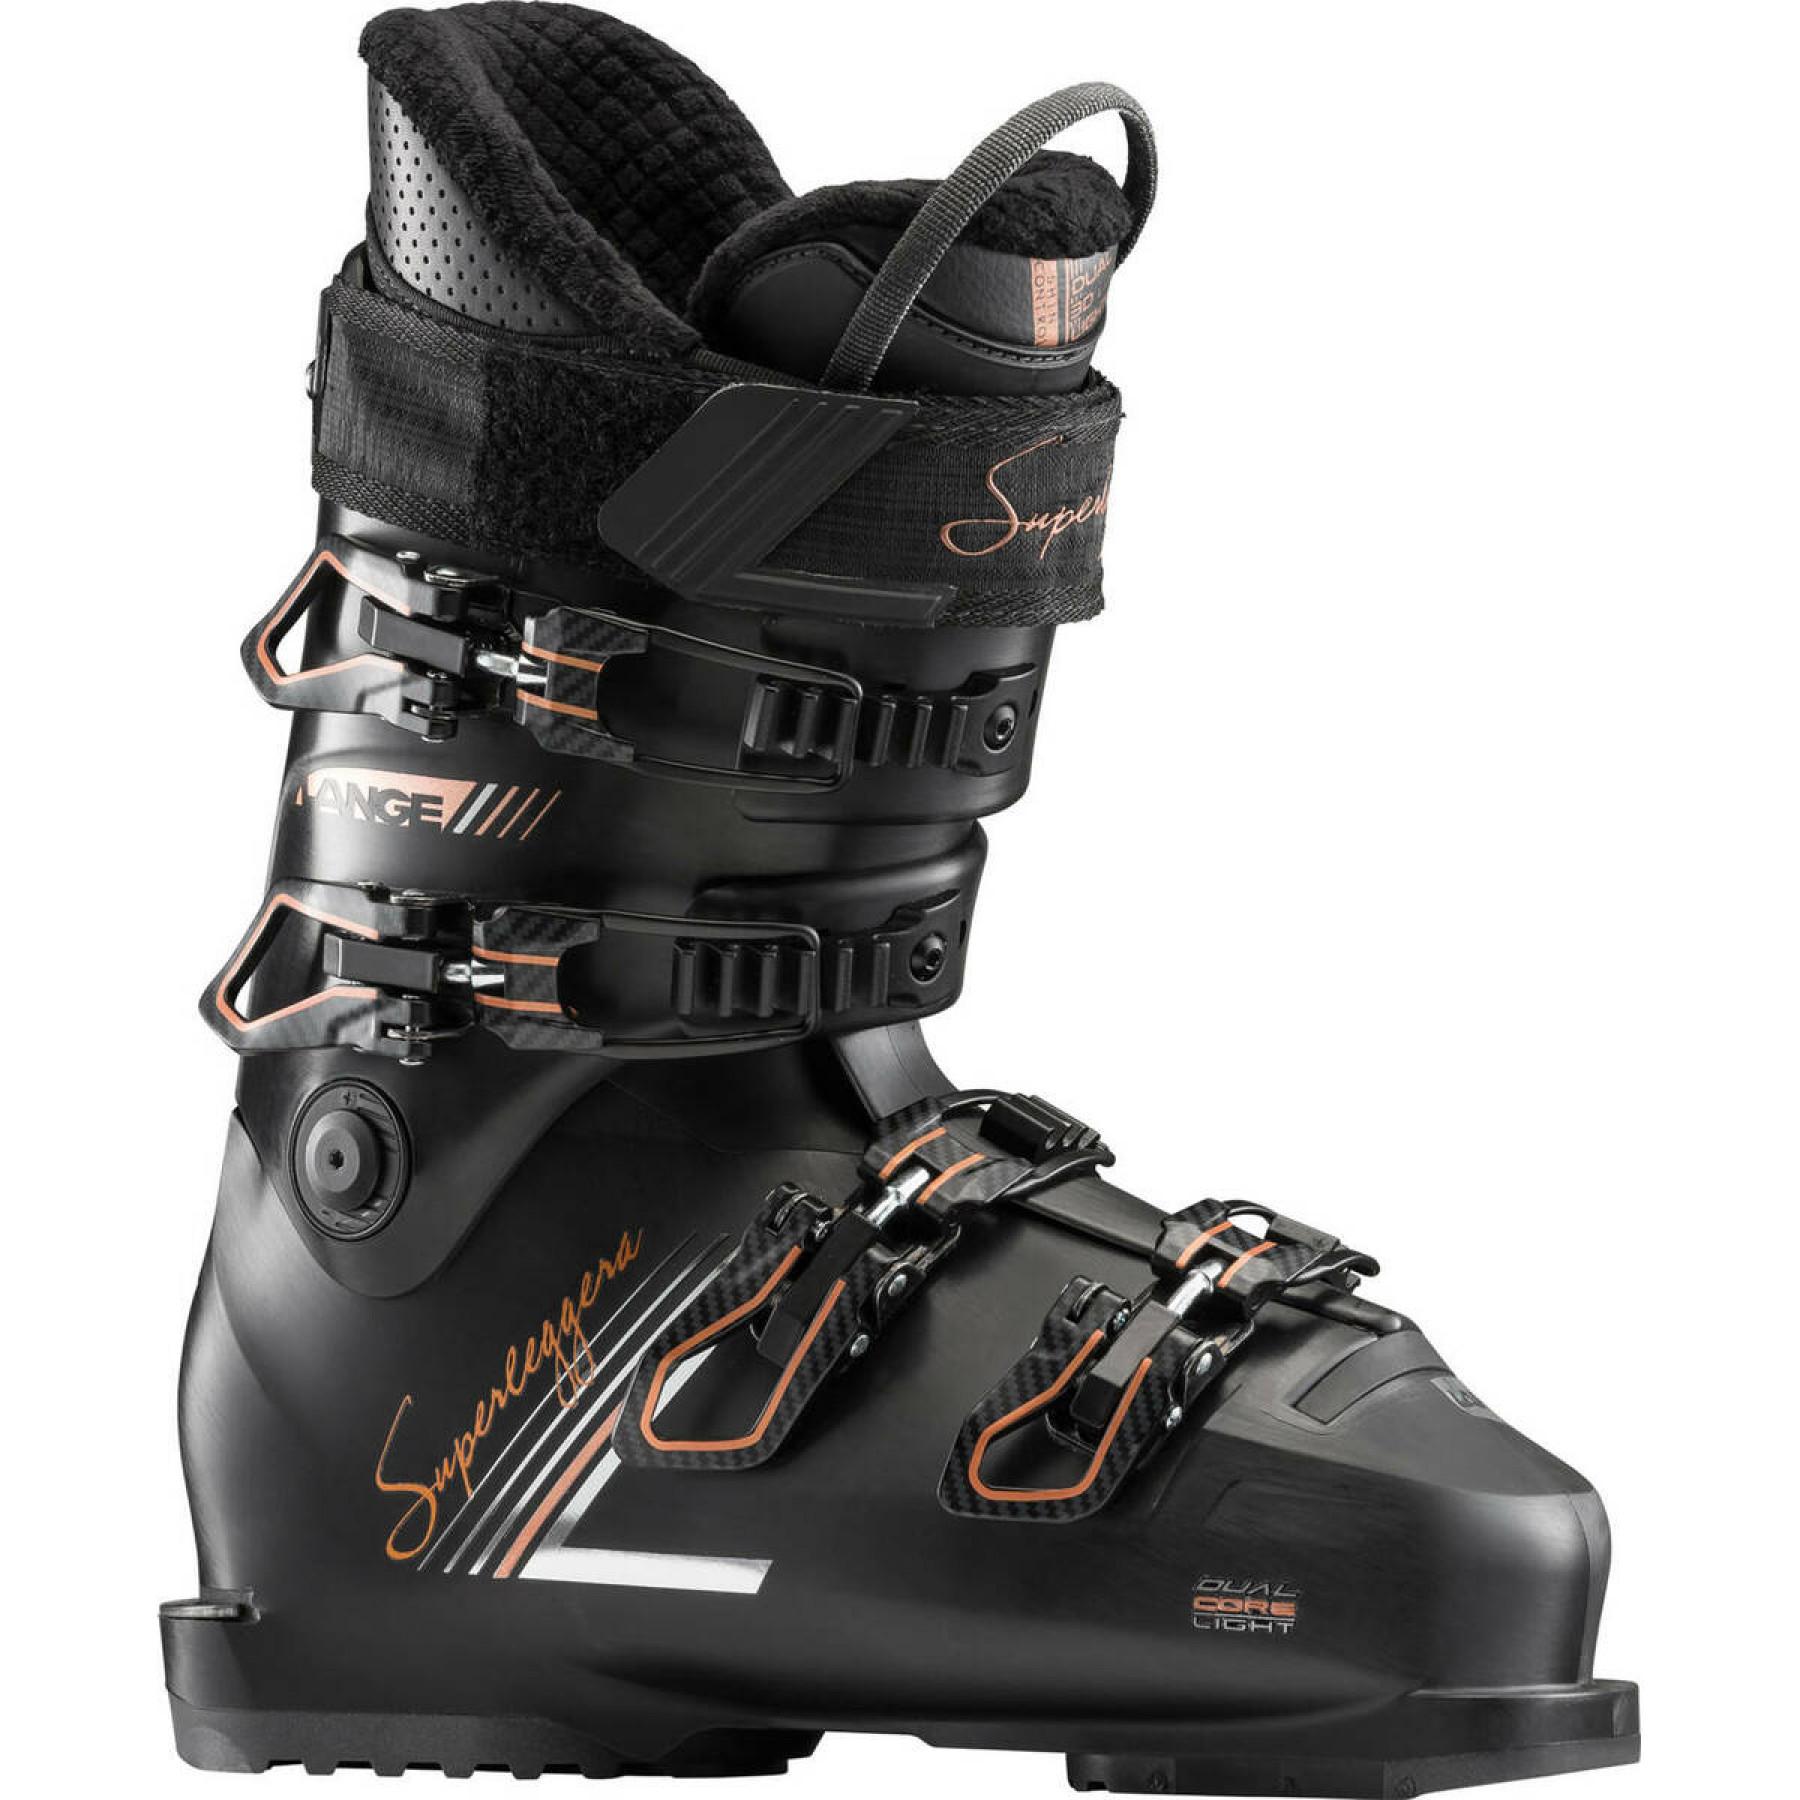 Damskie buty narciarskie Lange rx superleggera